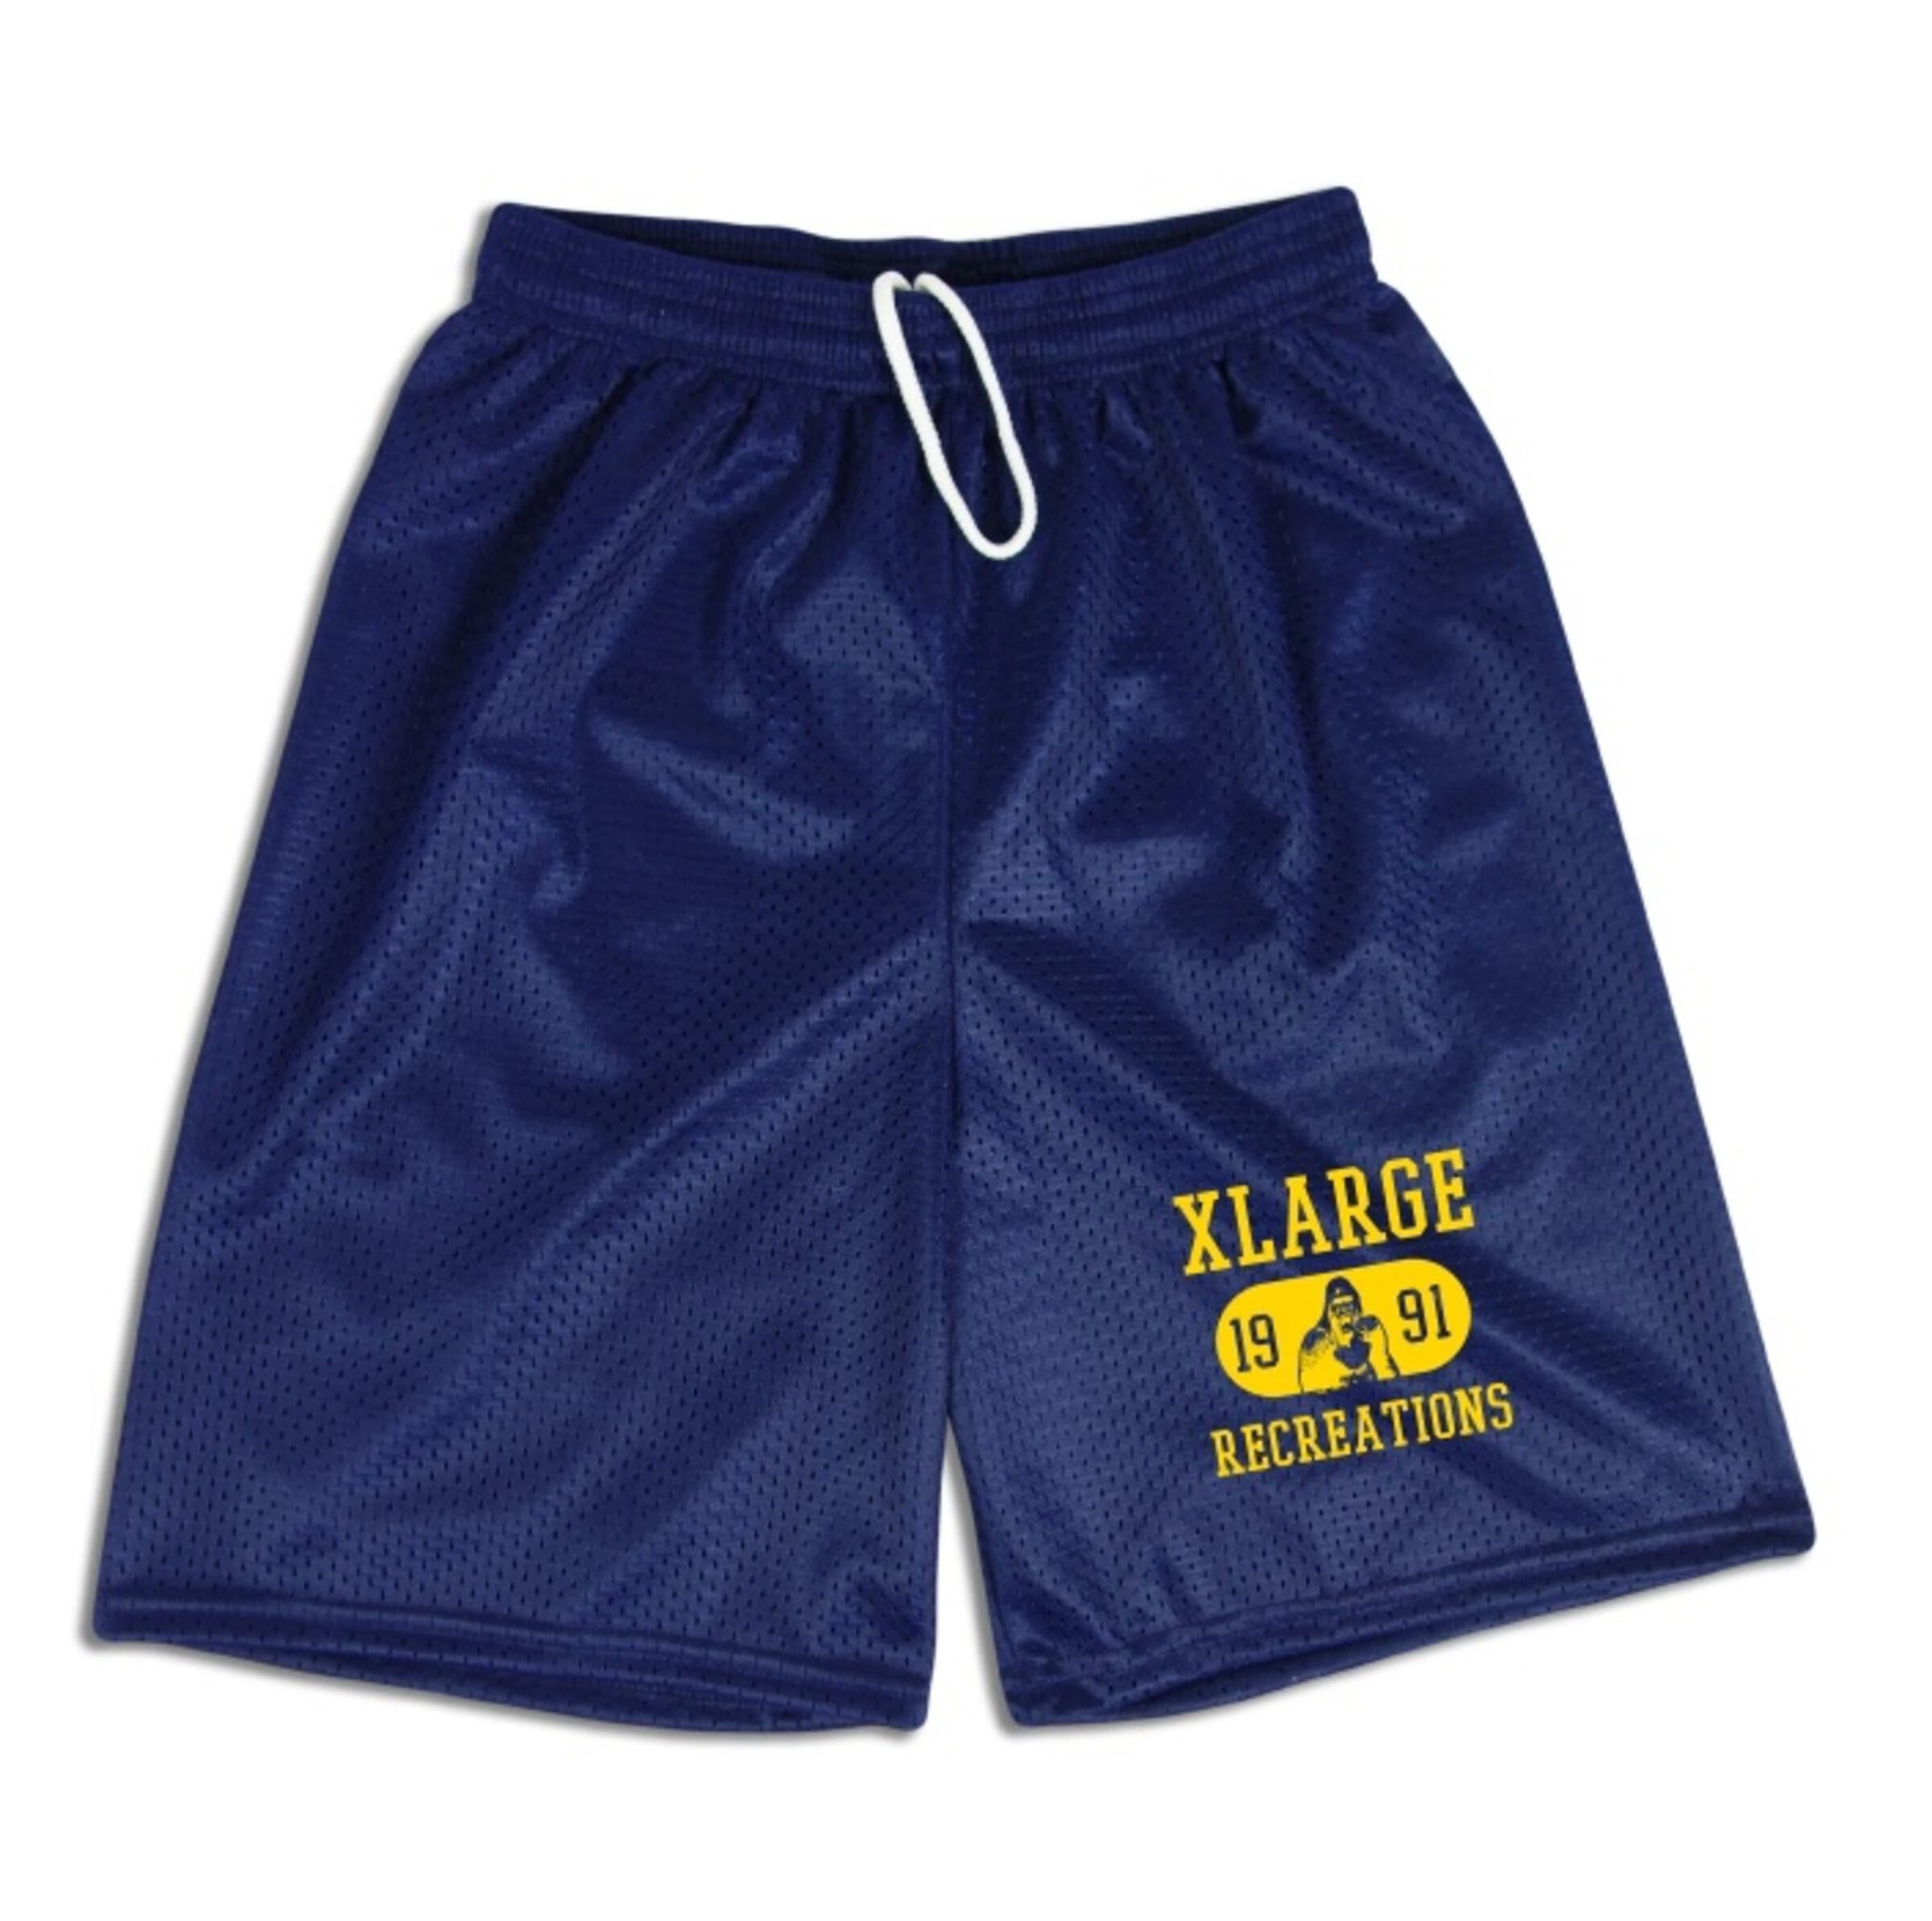 XLarge Recreations Mesh Basket Ball Shorts - Navy